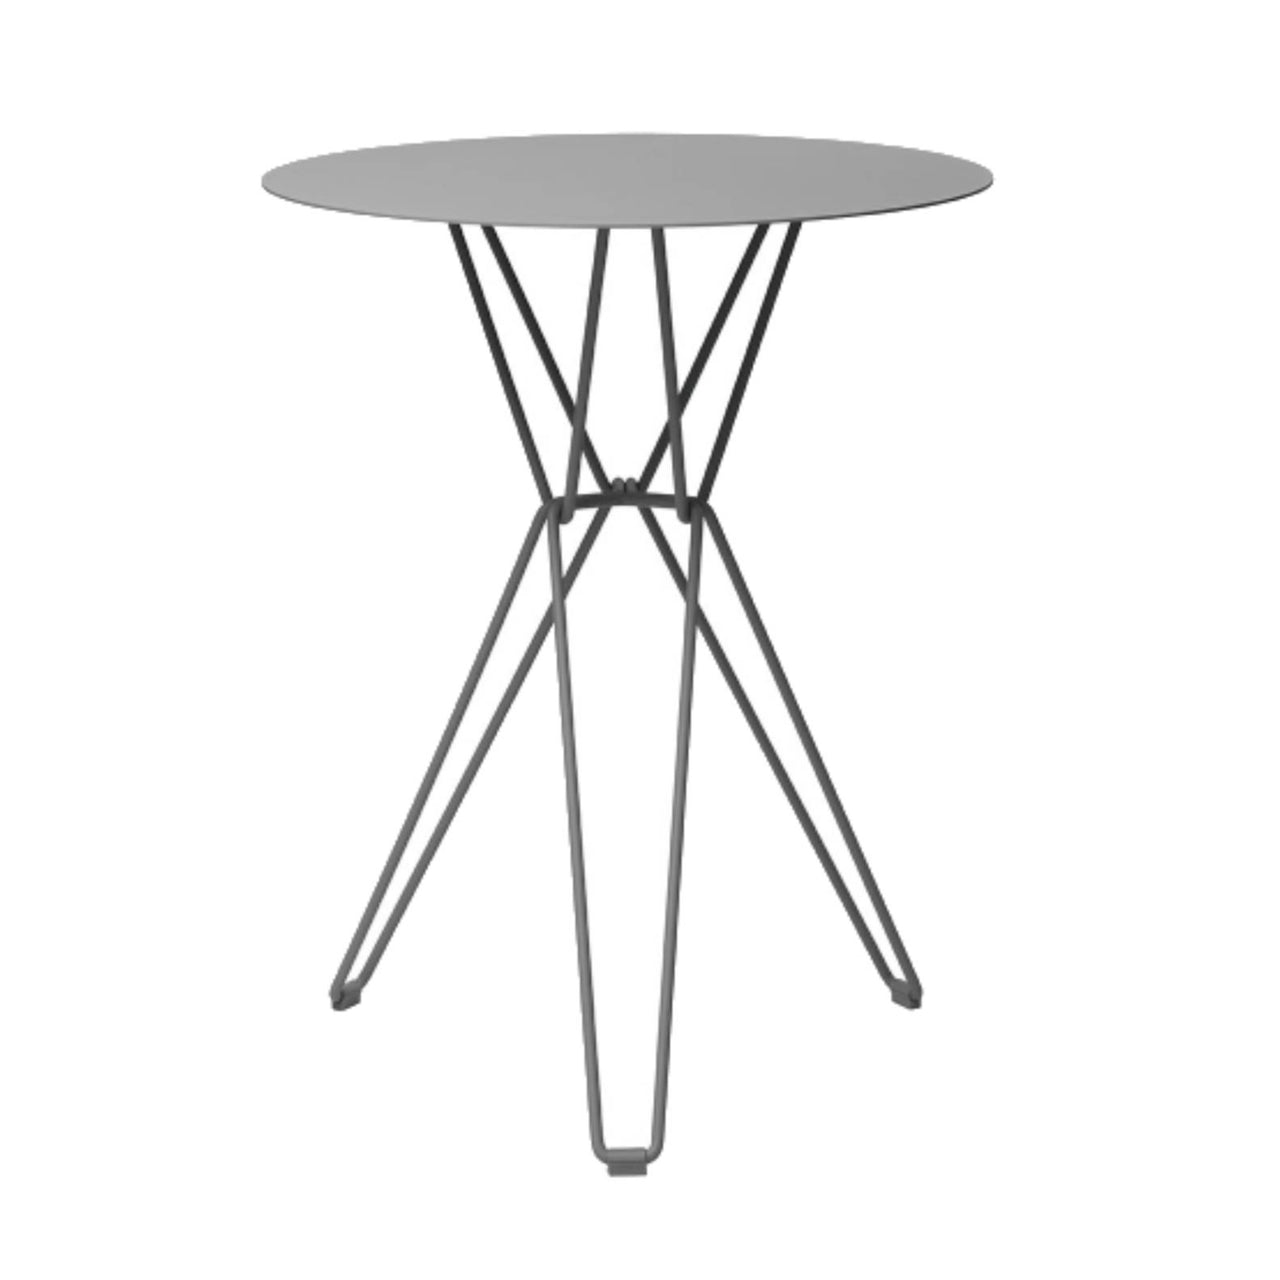 Tio Bar Table: Round + Stone Grey Metal